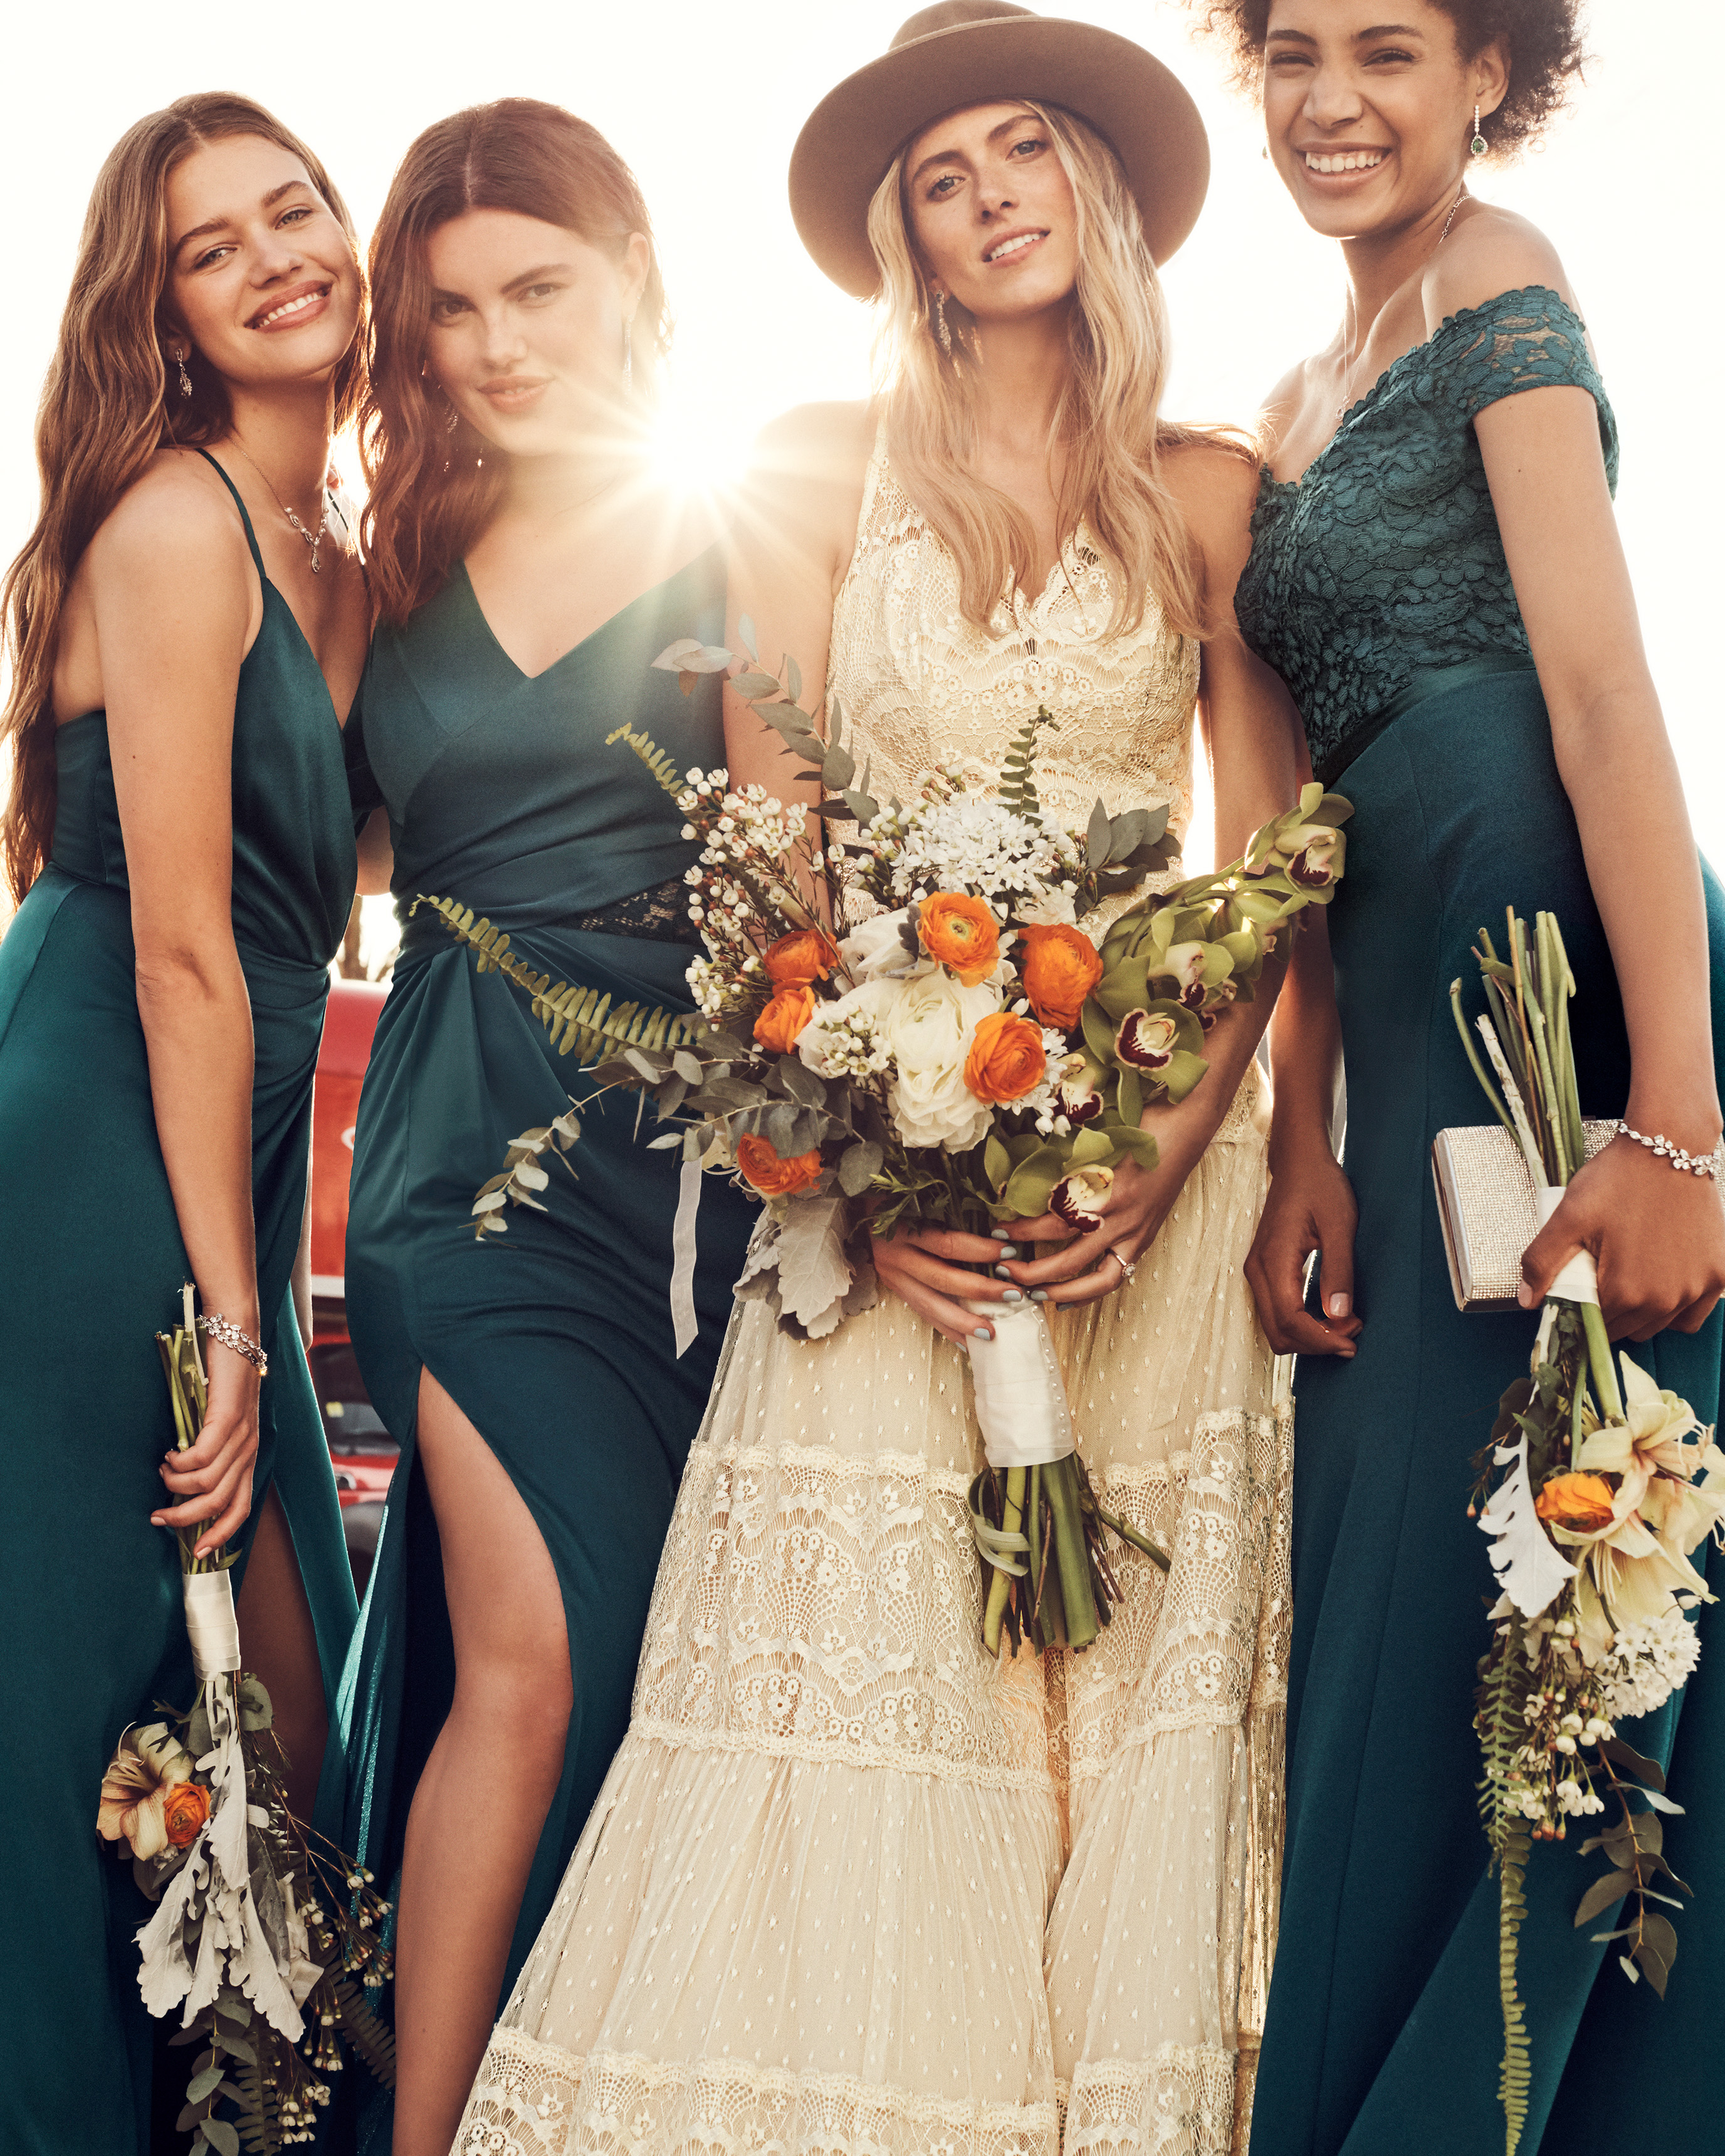 Bride and bridesmaids posing for camera in long dresses